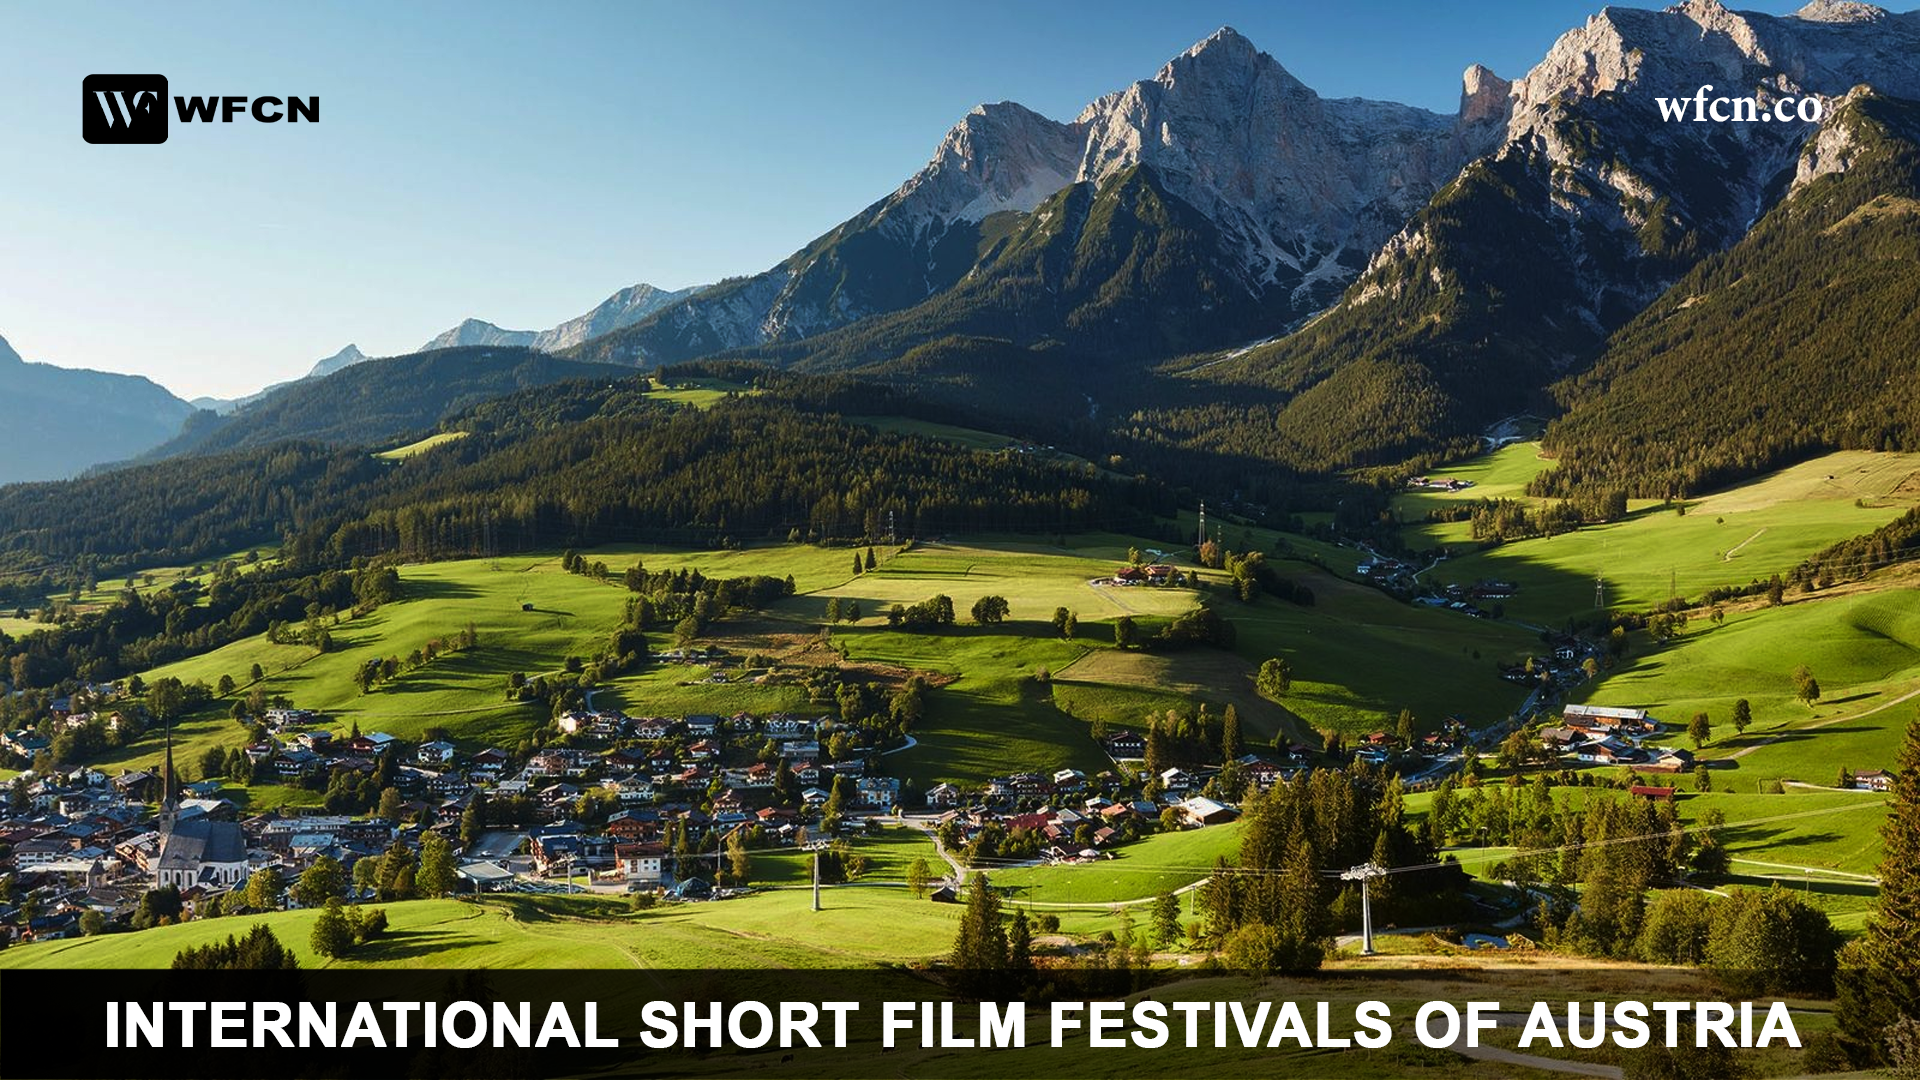 International Short Film Festivals of Austria